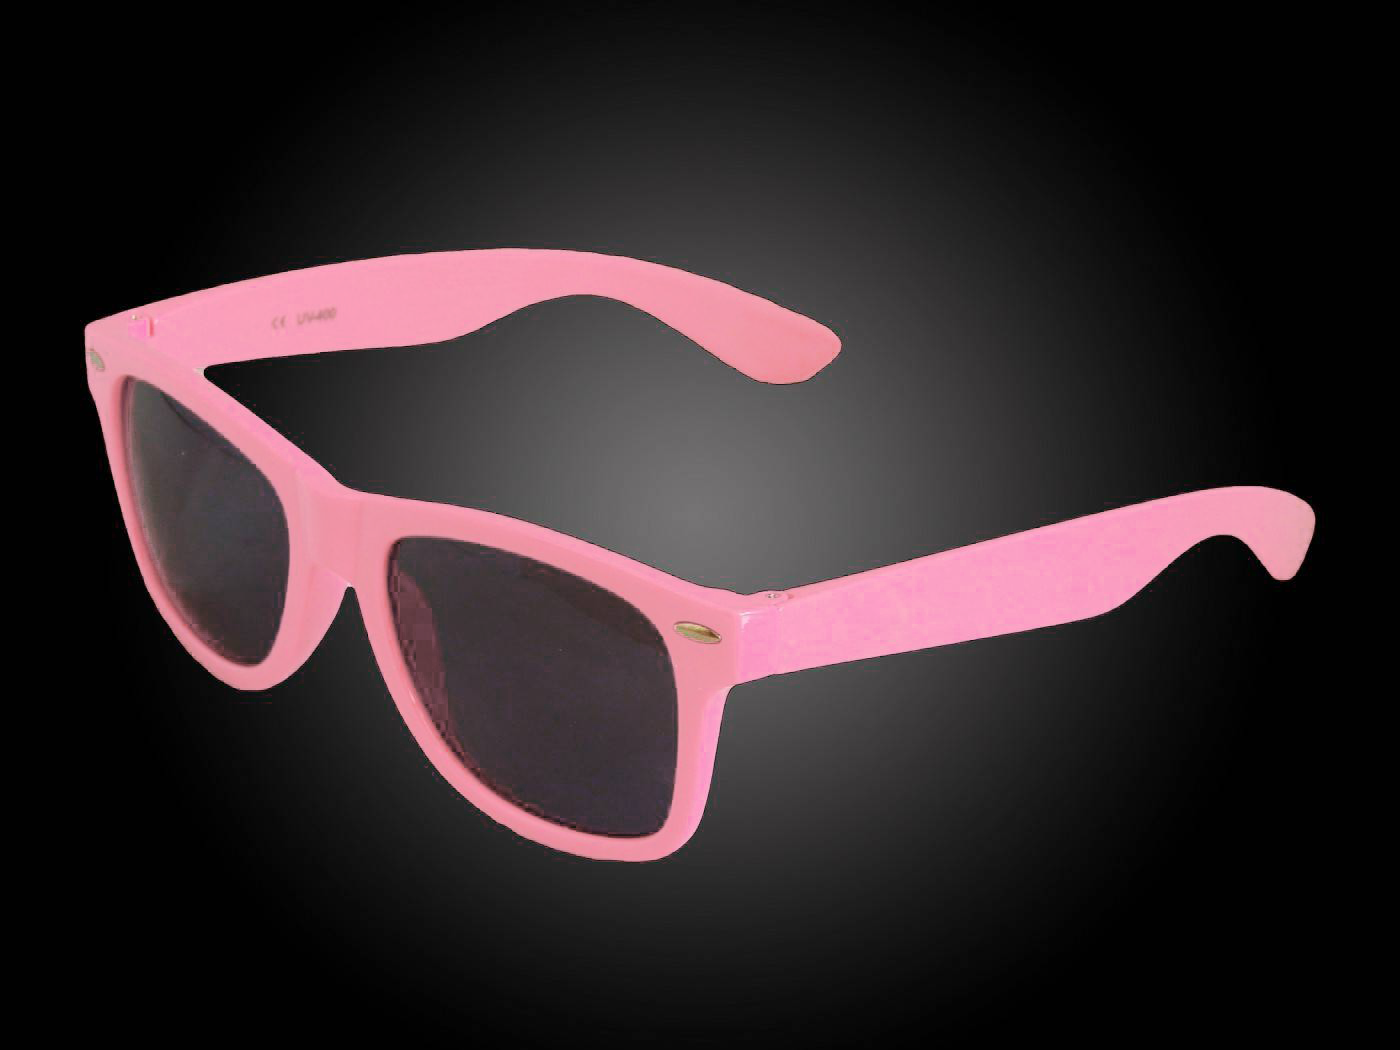 winkelwagen lied mode Festival zonnebril roze kopen? | De Horeca Bazaar